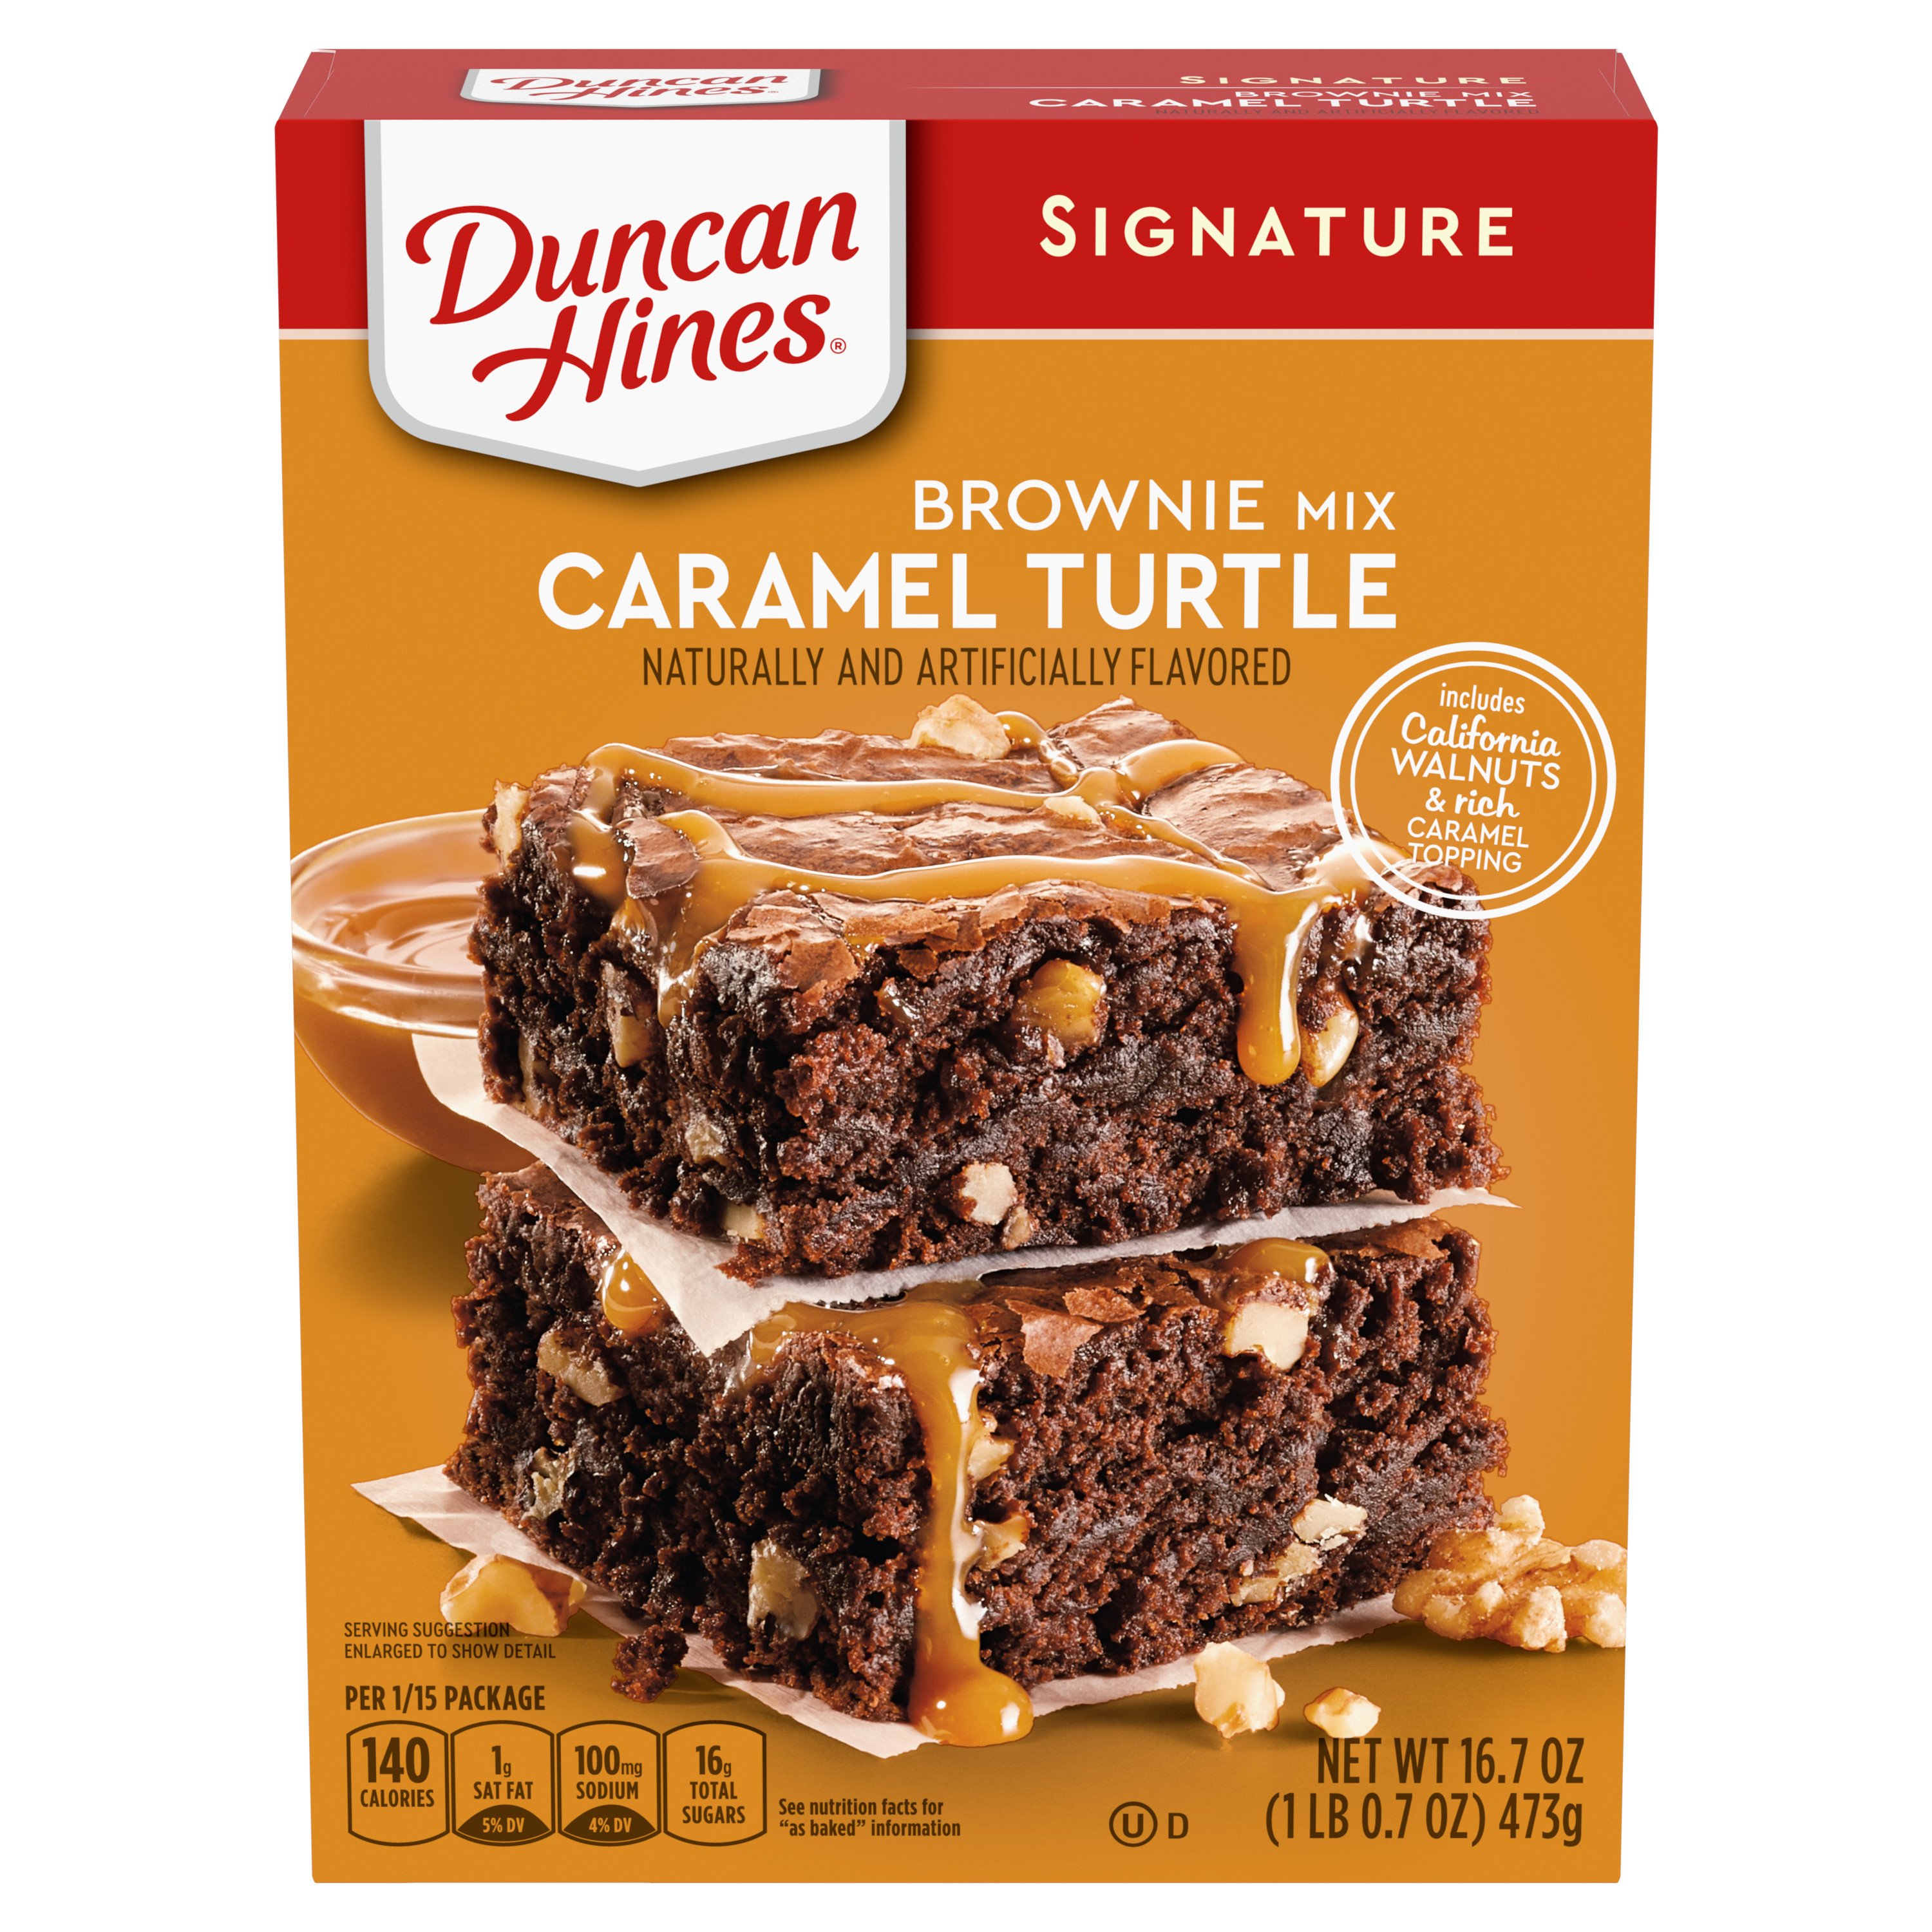 Duncan Hines Signature Caramel Turtle Brownie Mix Shop Baking Mixes at H-E-B